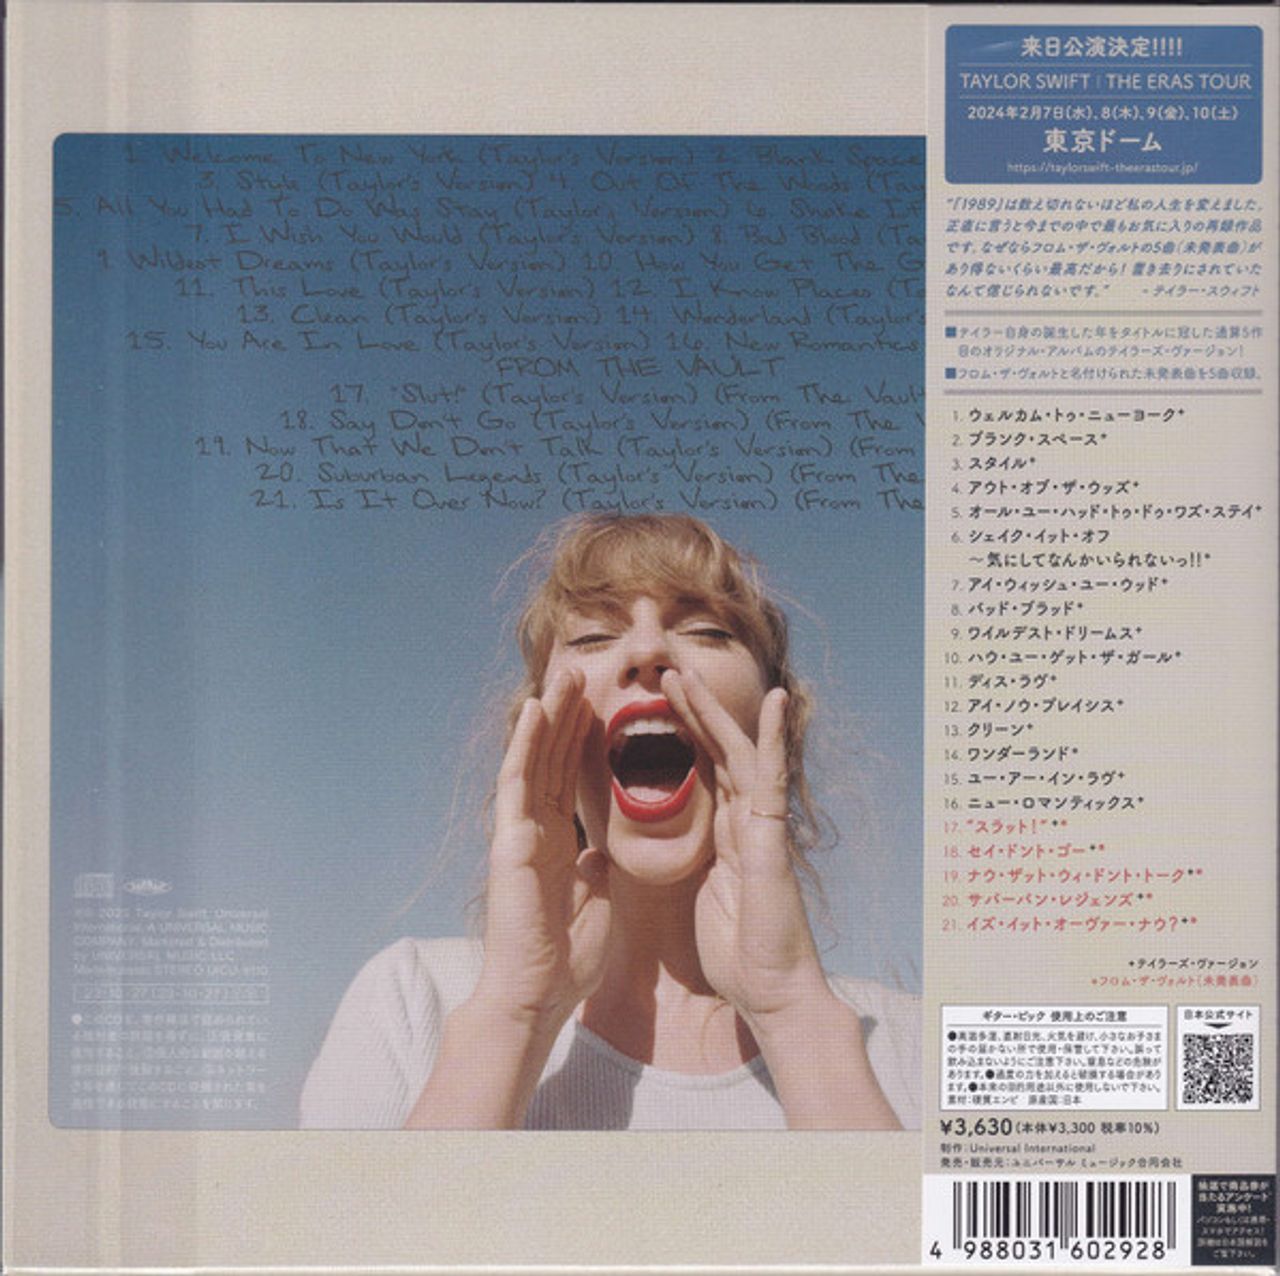 Taylor Swift 1989 Taylor's Version - Deluxe 7-inch Sleeve + Bonus Acrylic  Keychain Japanese CD album